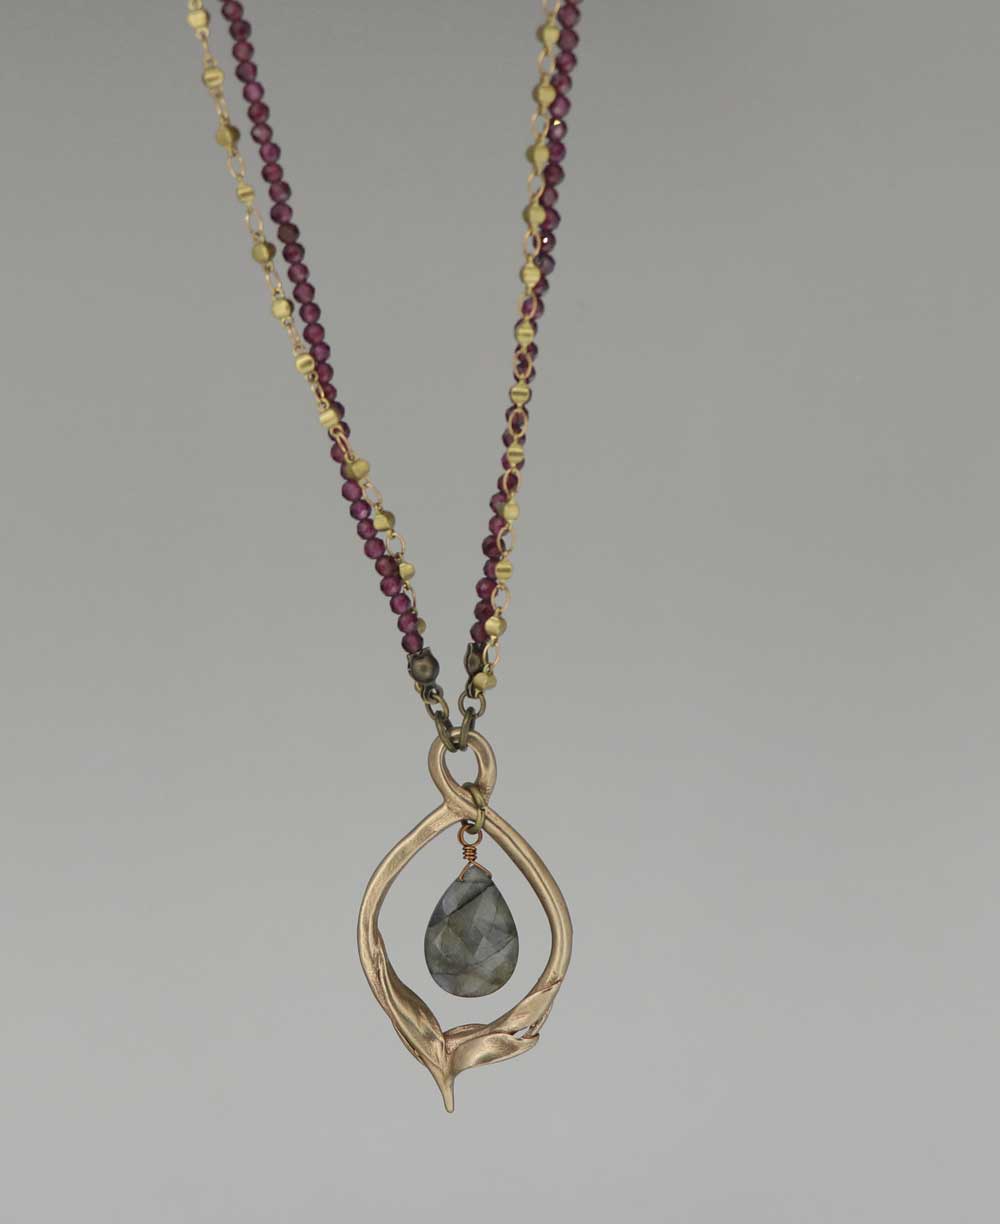 Lotus Petal Necklace with Rhodolite Garnet Chain - Necklaces